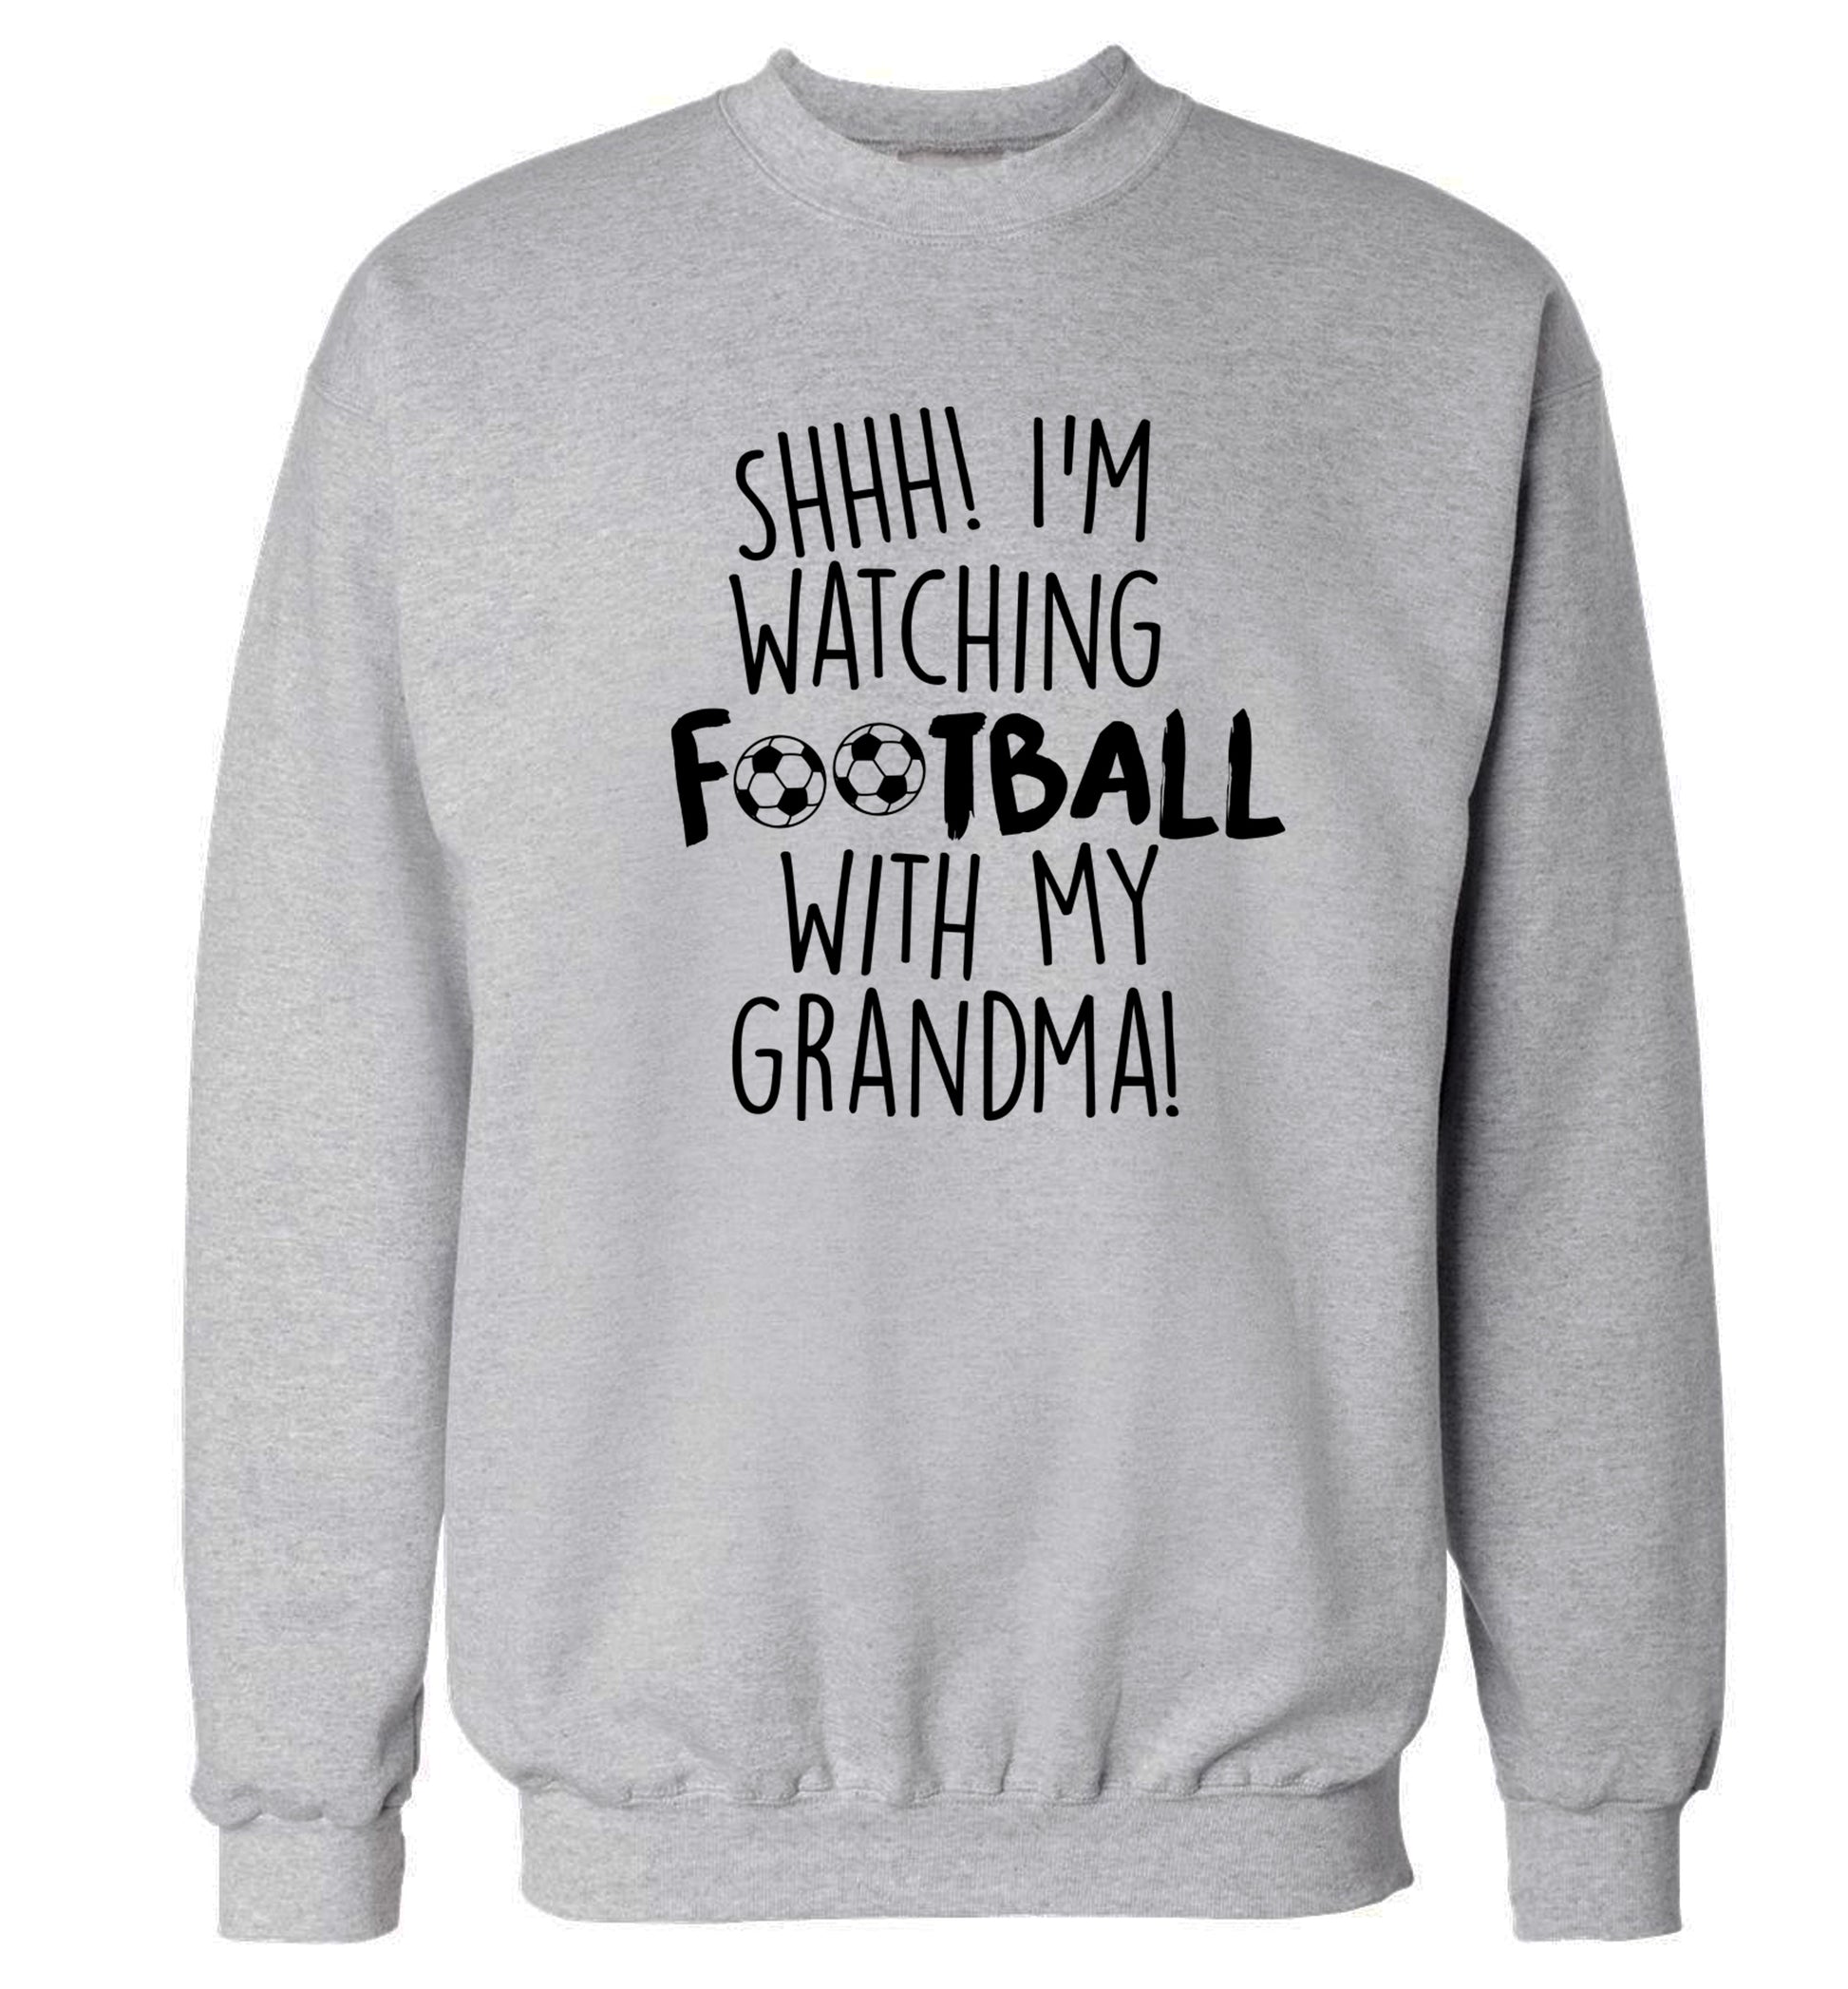 Shhh I'm watching football with my grandma Adult's unisexgrey Sweater 2XL